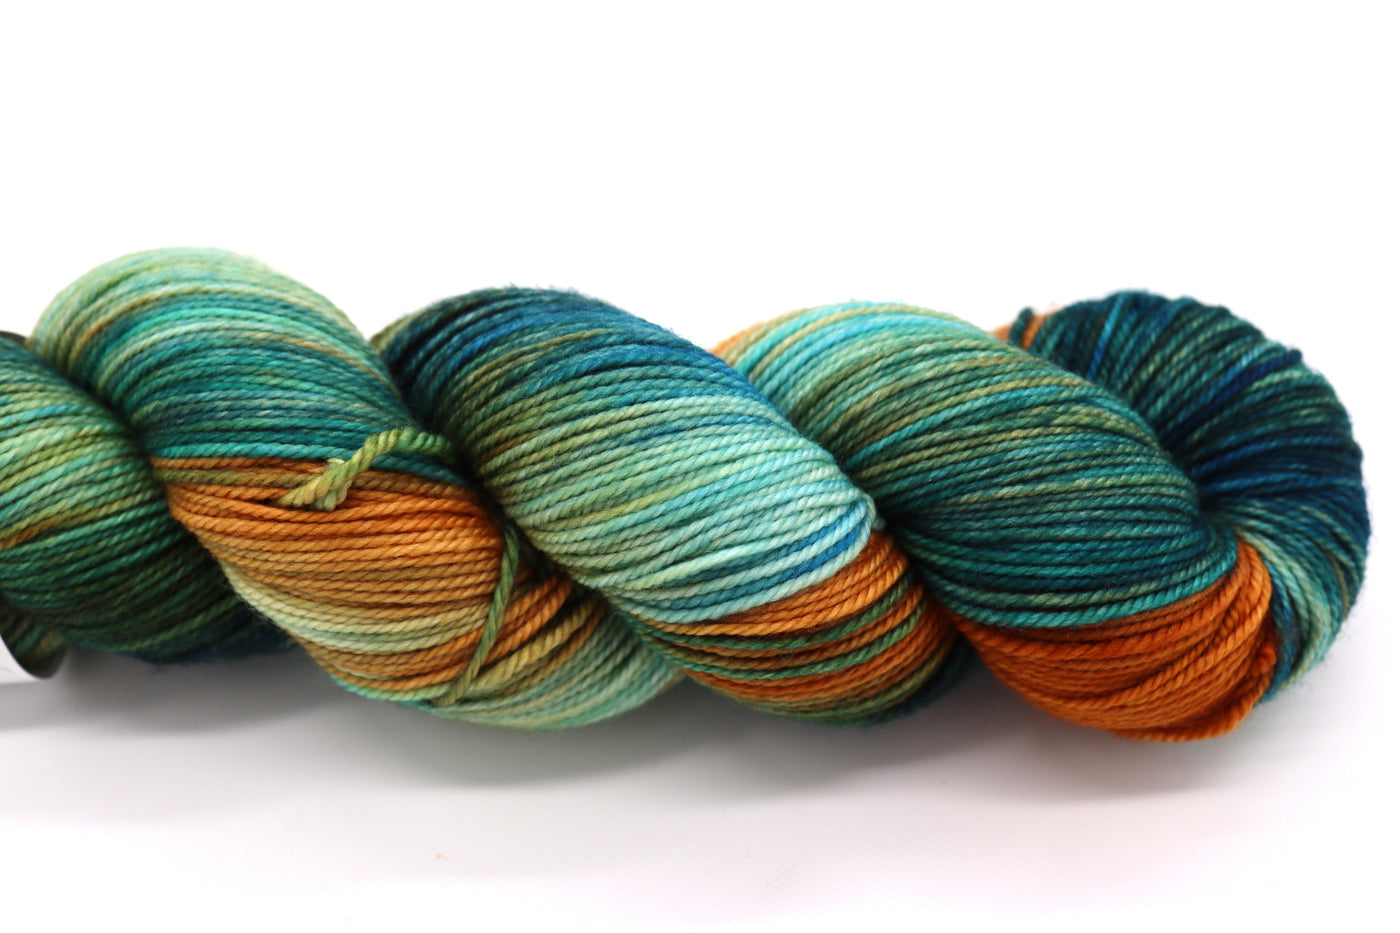 Dream in Color Smooshy Cashmere Fingering Knitting Yarn